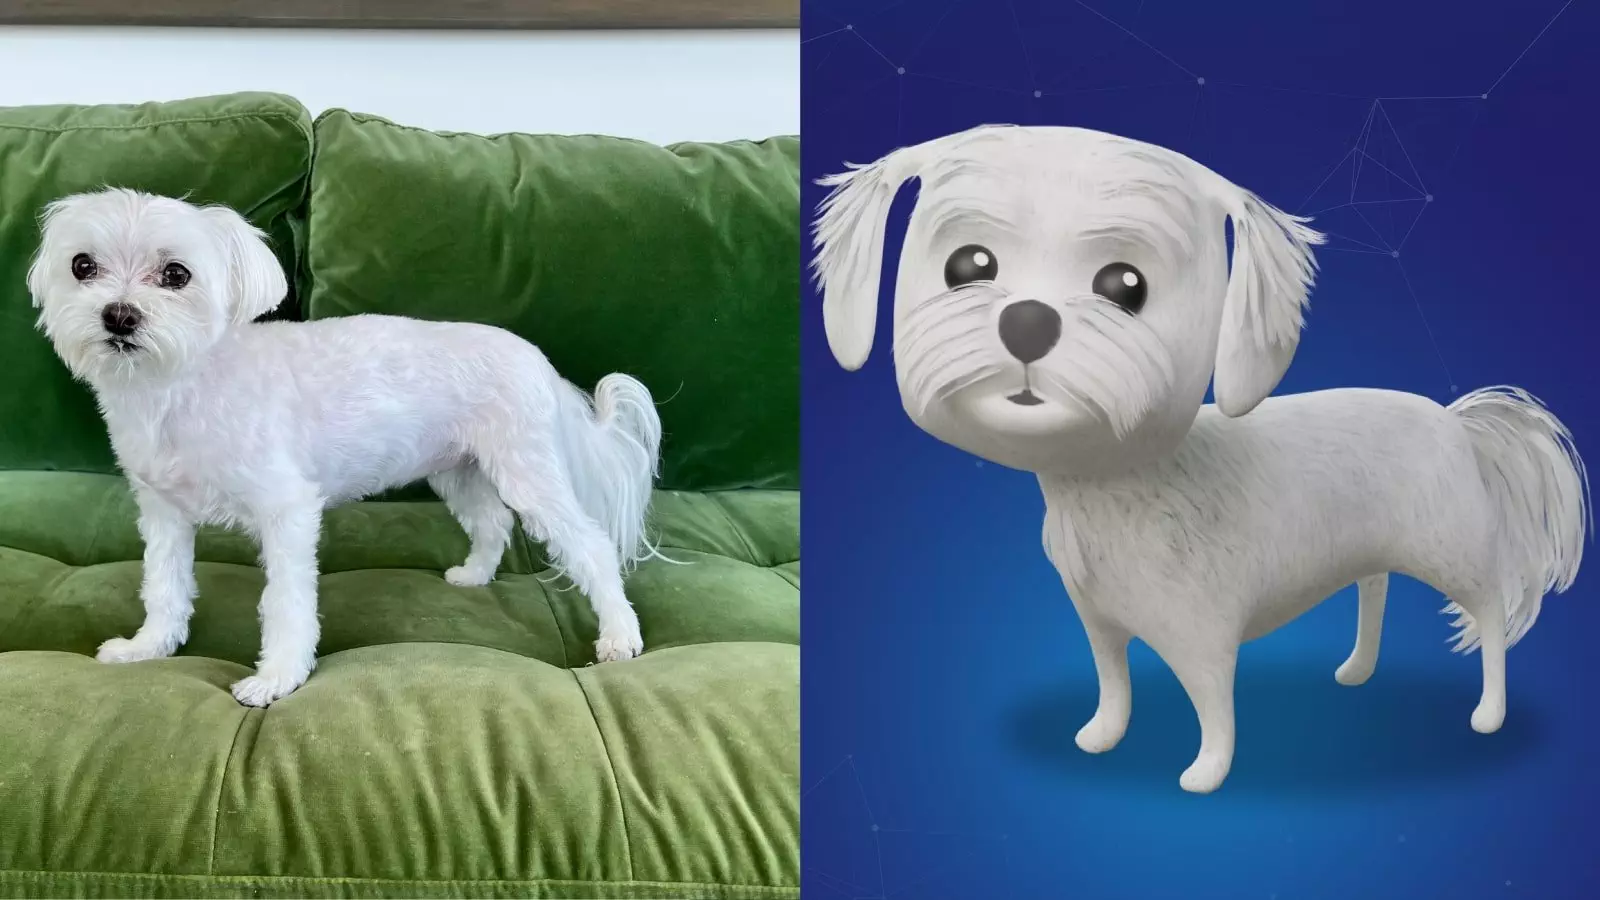 image of a Petaverse dog NFT alongside a real photo of a dog